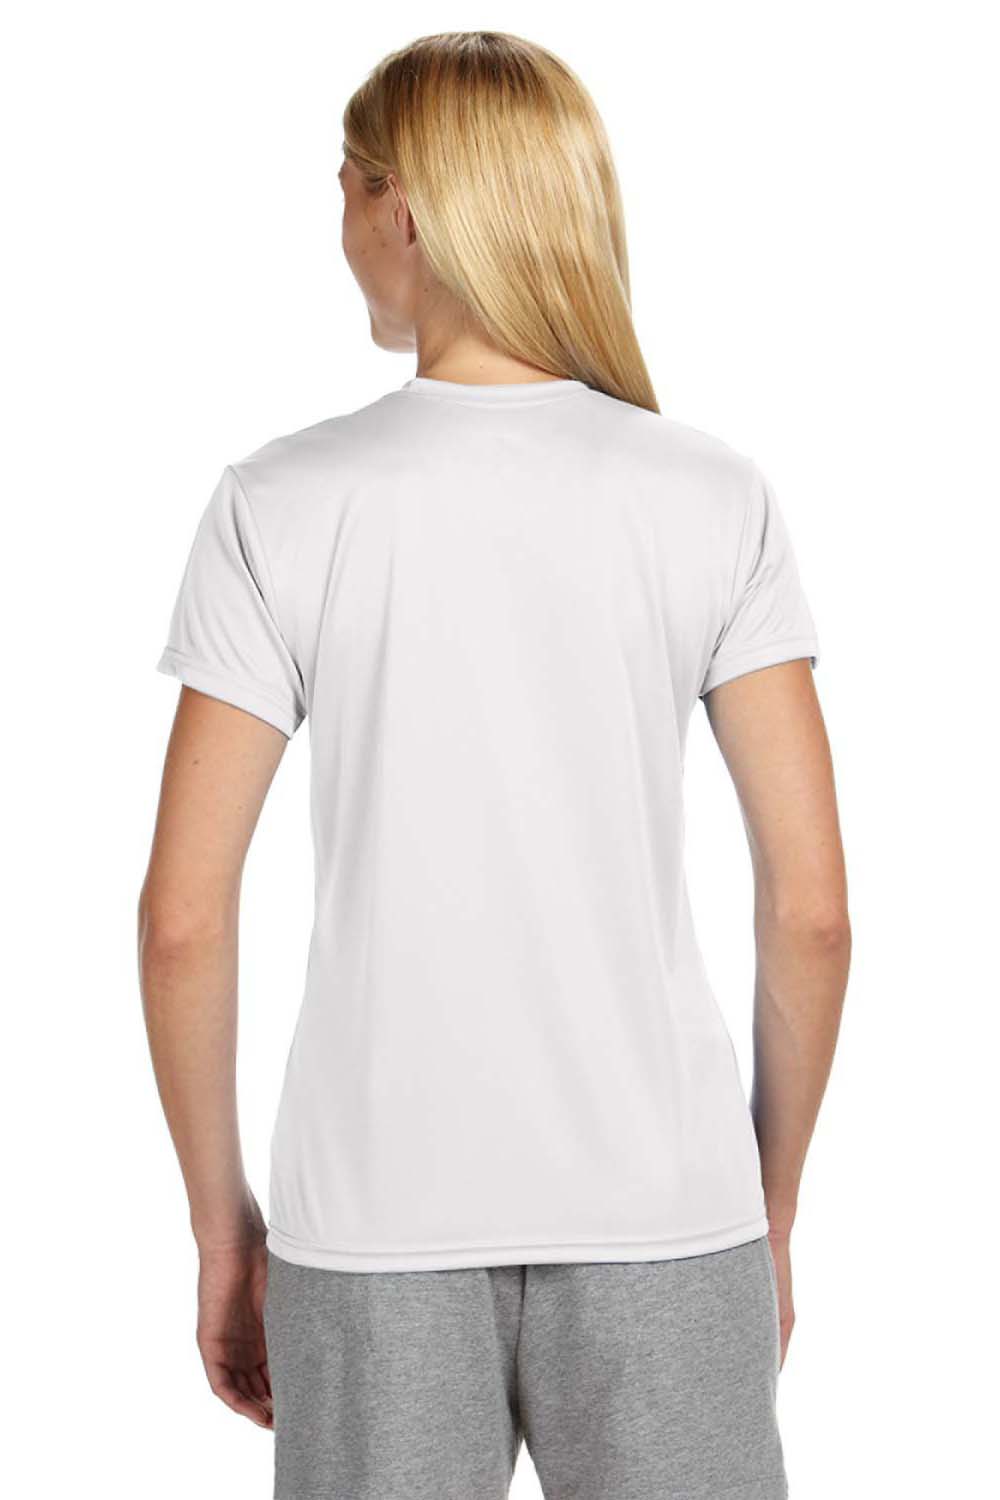 A4 NW3201 Womens Performance Moisture Wicking Short Sleeve Crewneck T-Shirt White Model Back